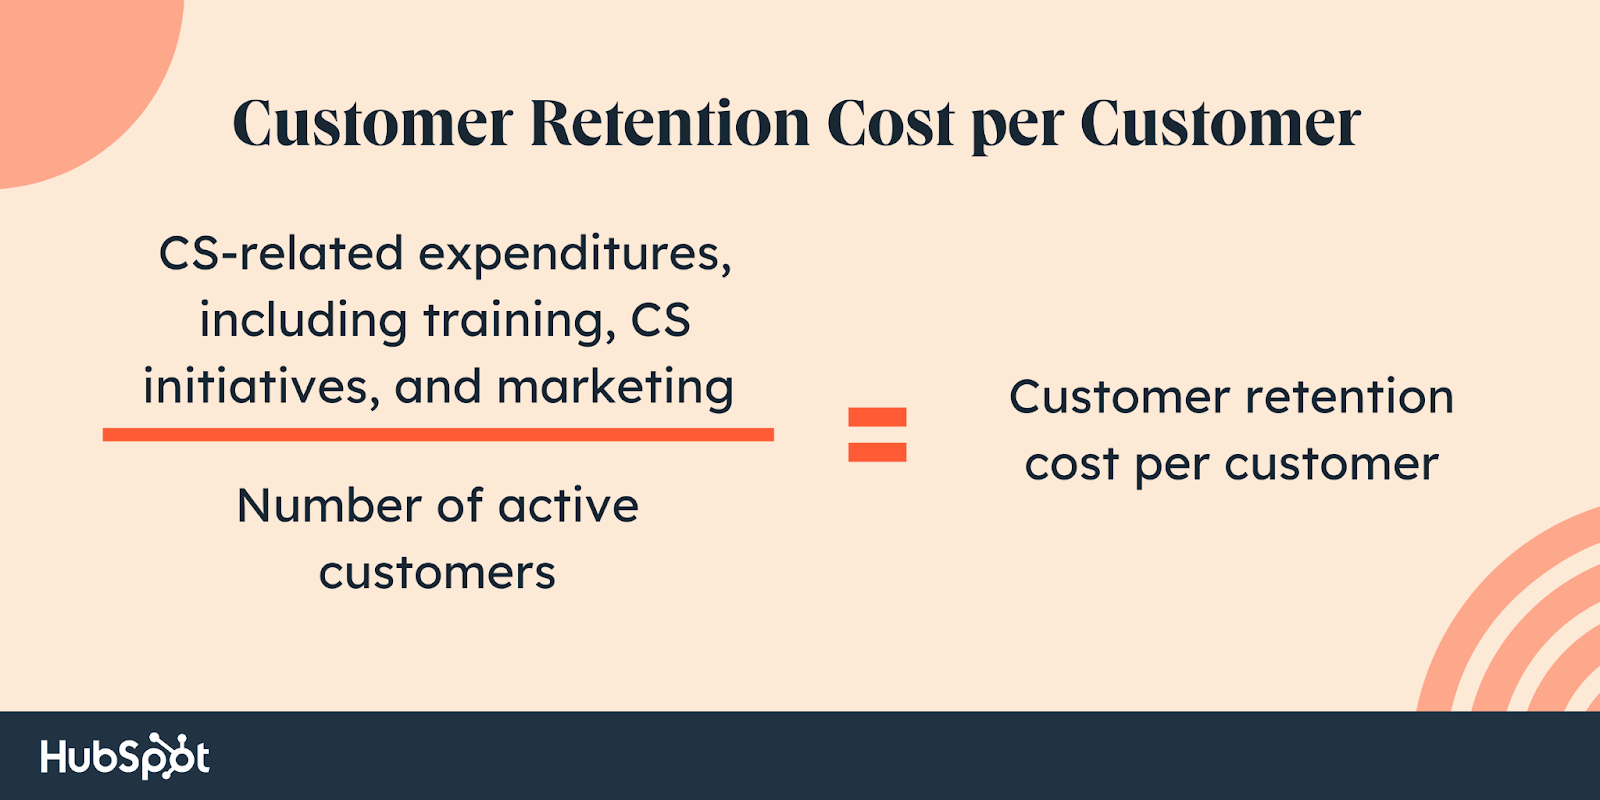 customer retention cost per customer formula